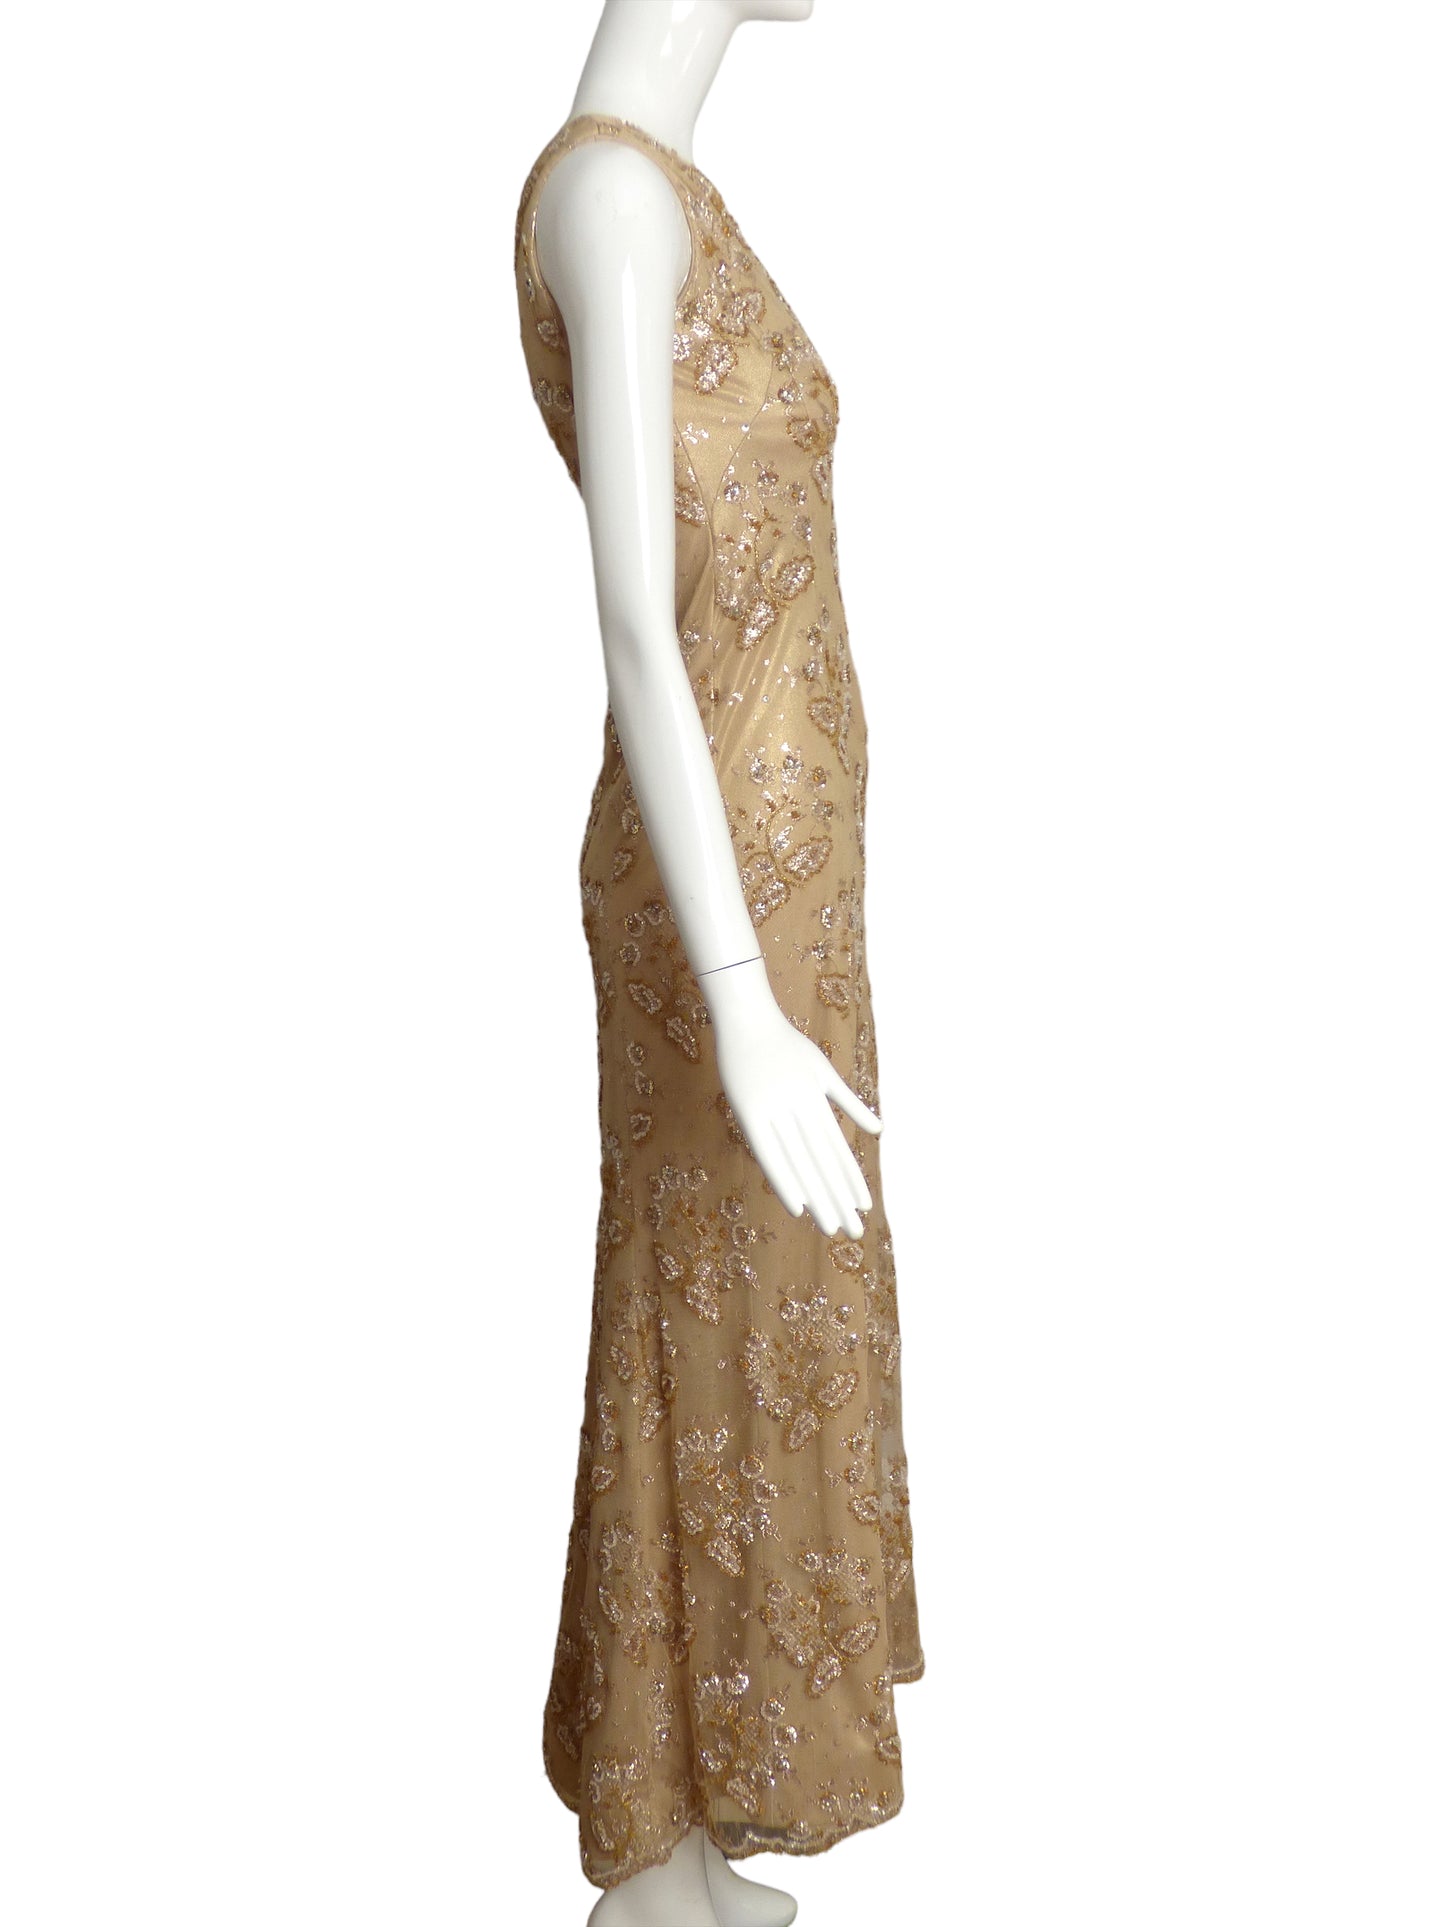 RIPETTA- Gold Beaded Net Gown, Size 4